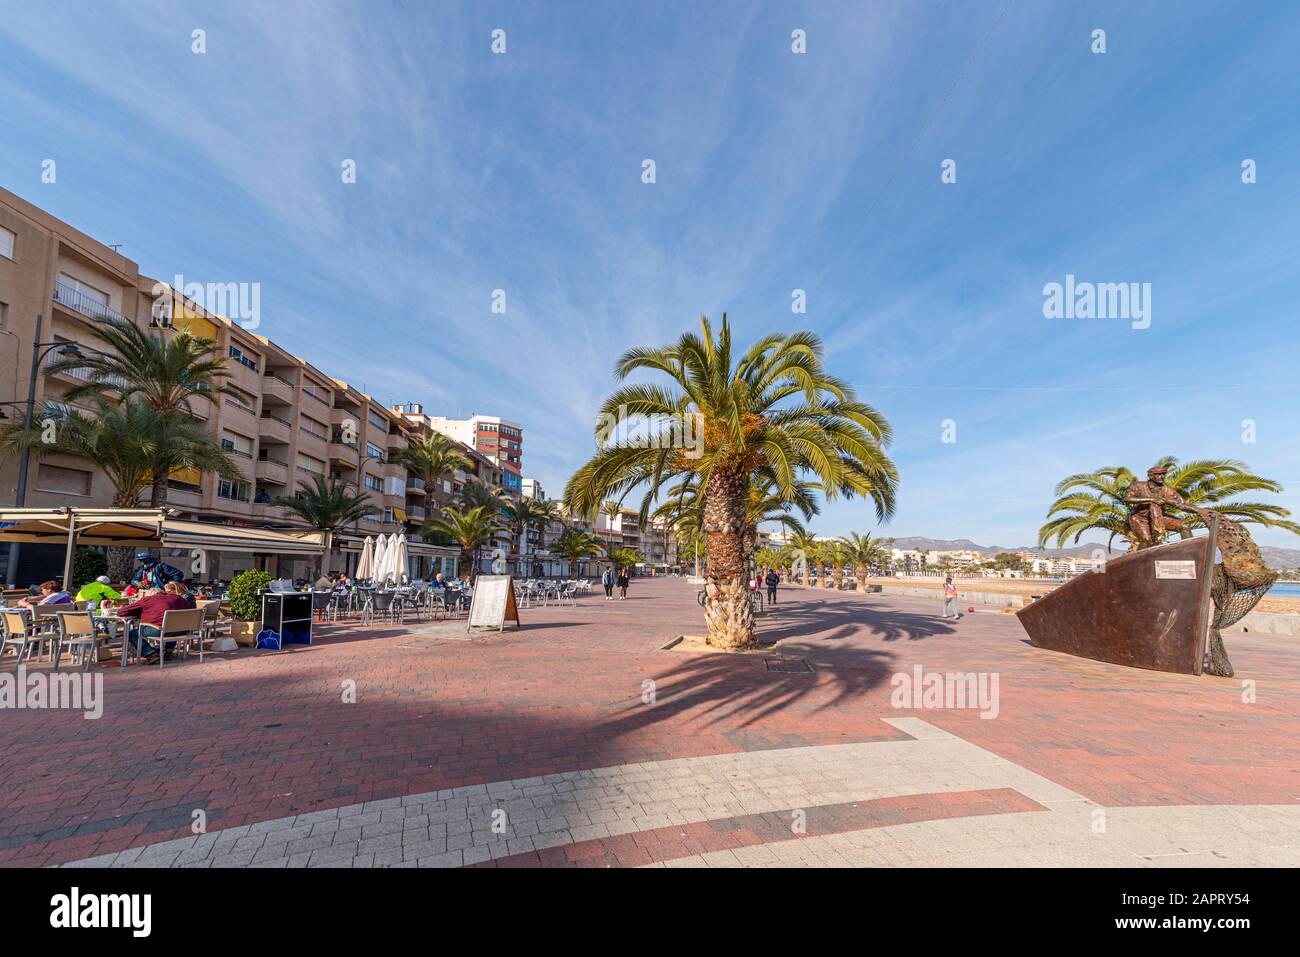 Seafront promenade in Puerto de Mazarron, Murcia, Costa Calida, Spain, on the Mediterranean coast. People in al fresco bar, cafe. Fisherman sculpture Stock Photo